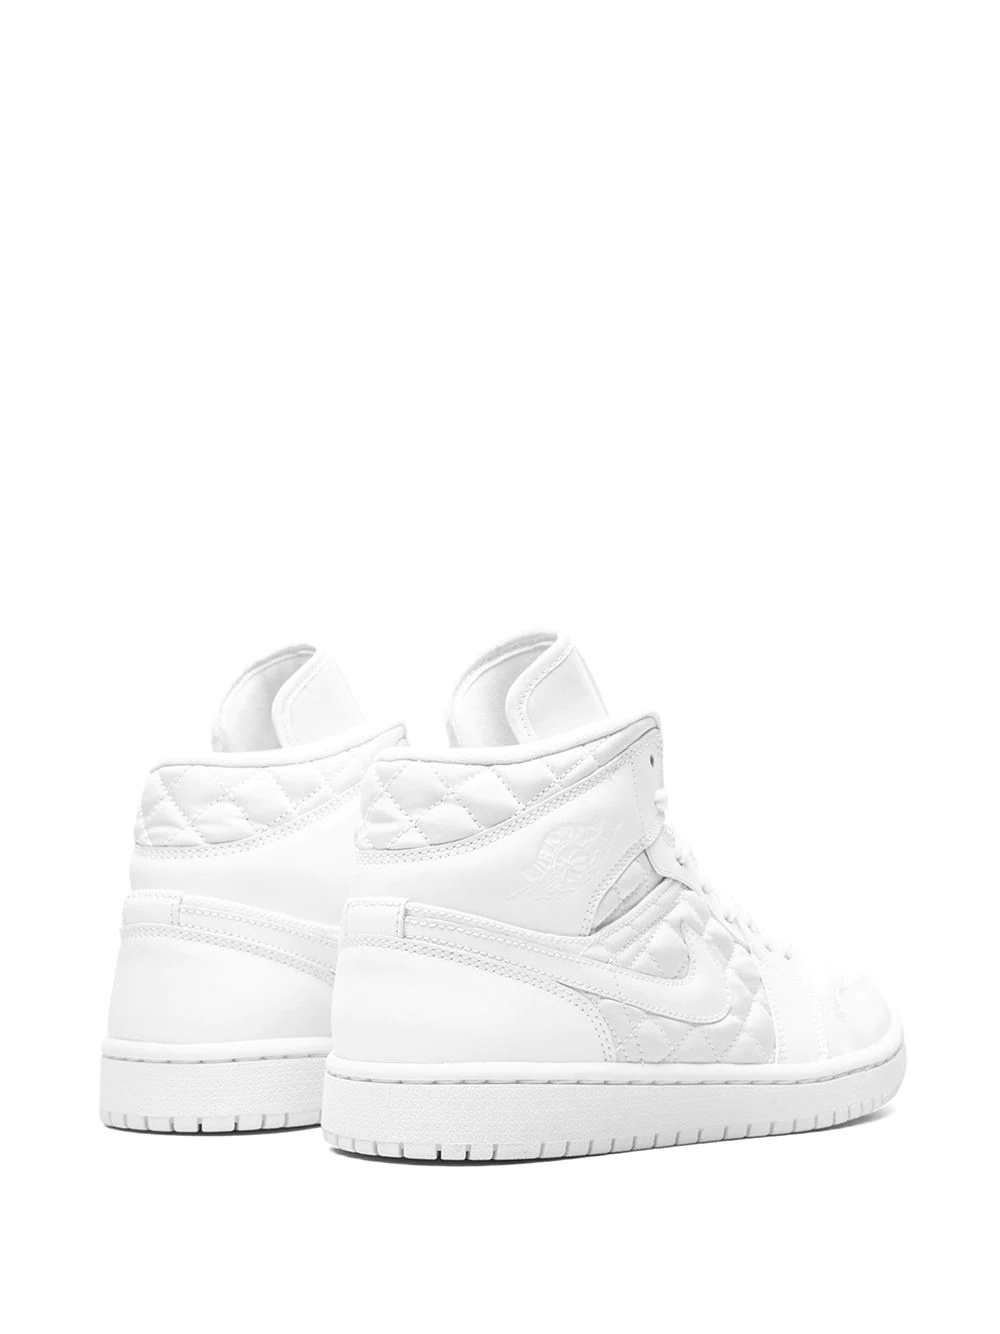 Air Jordan 1 Mid "Quilted White" sneakers - 3